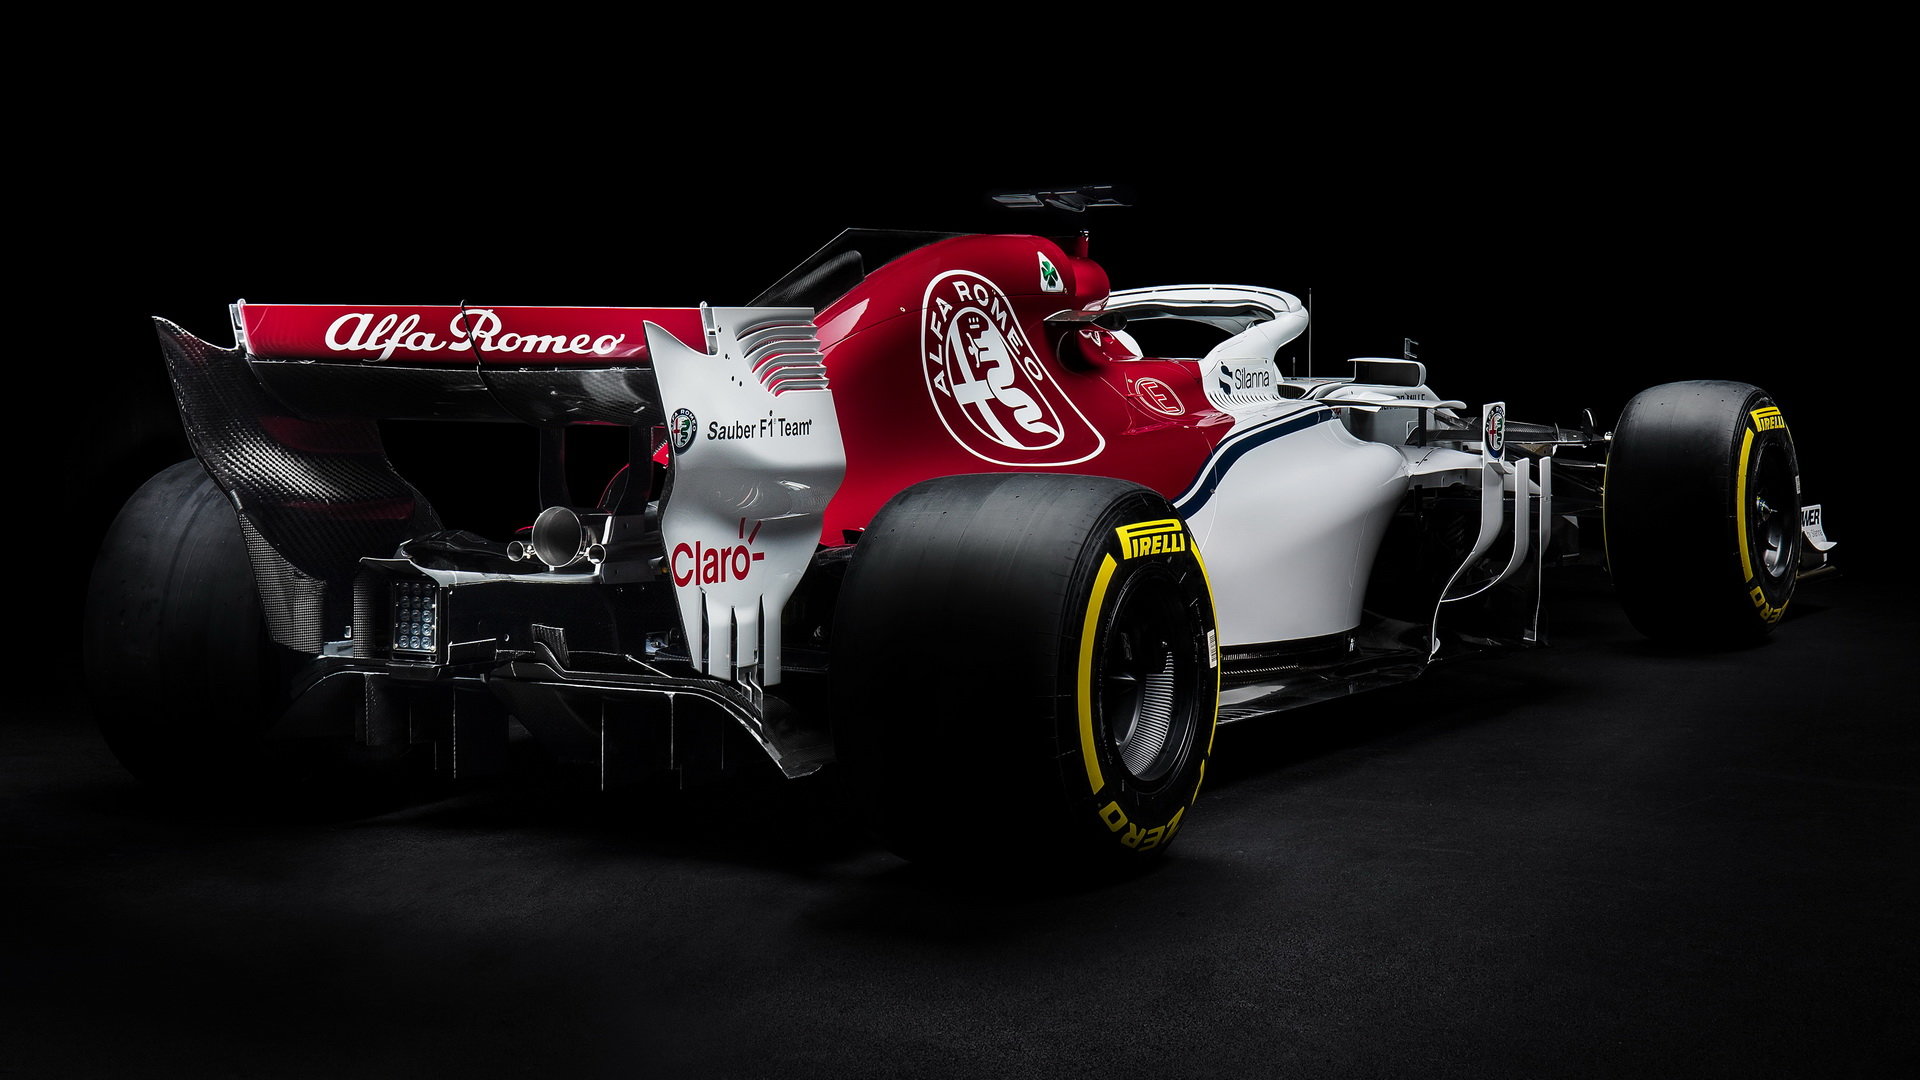 Nový vůz Sauber C37- Ferrari